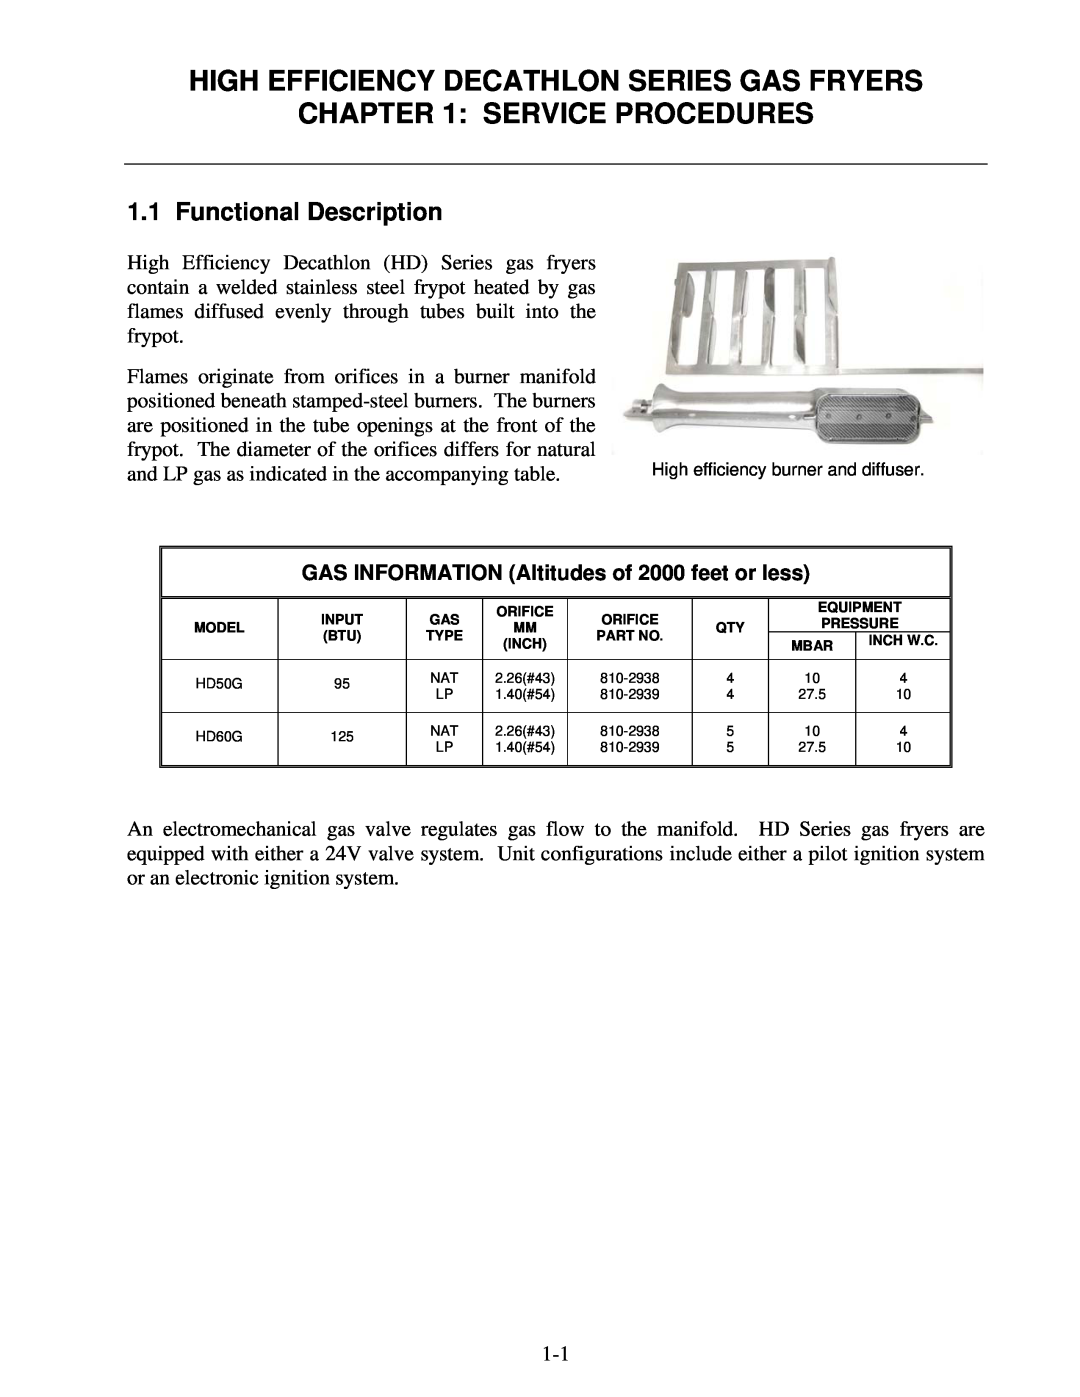 Frymaster FPHD manual High Efficiency Decathlon Series Gas Fryers, Service Procedures, Functional Description 